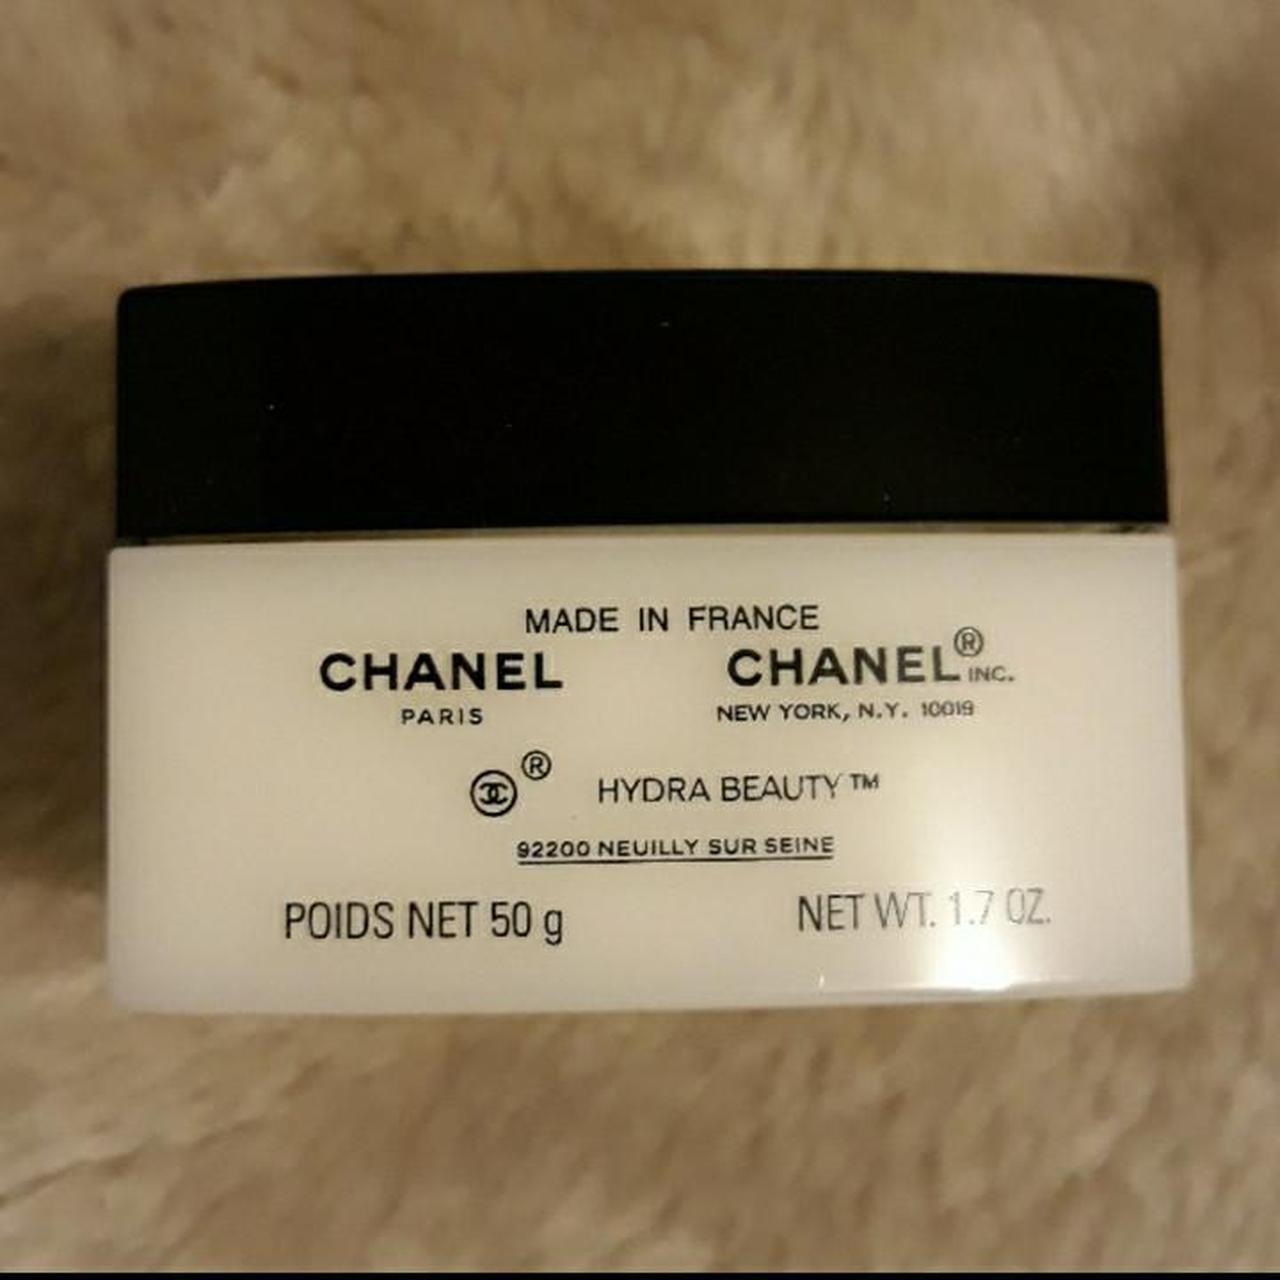 Chanel Hydra Beauty Gel - 50 ml jar